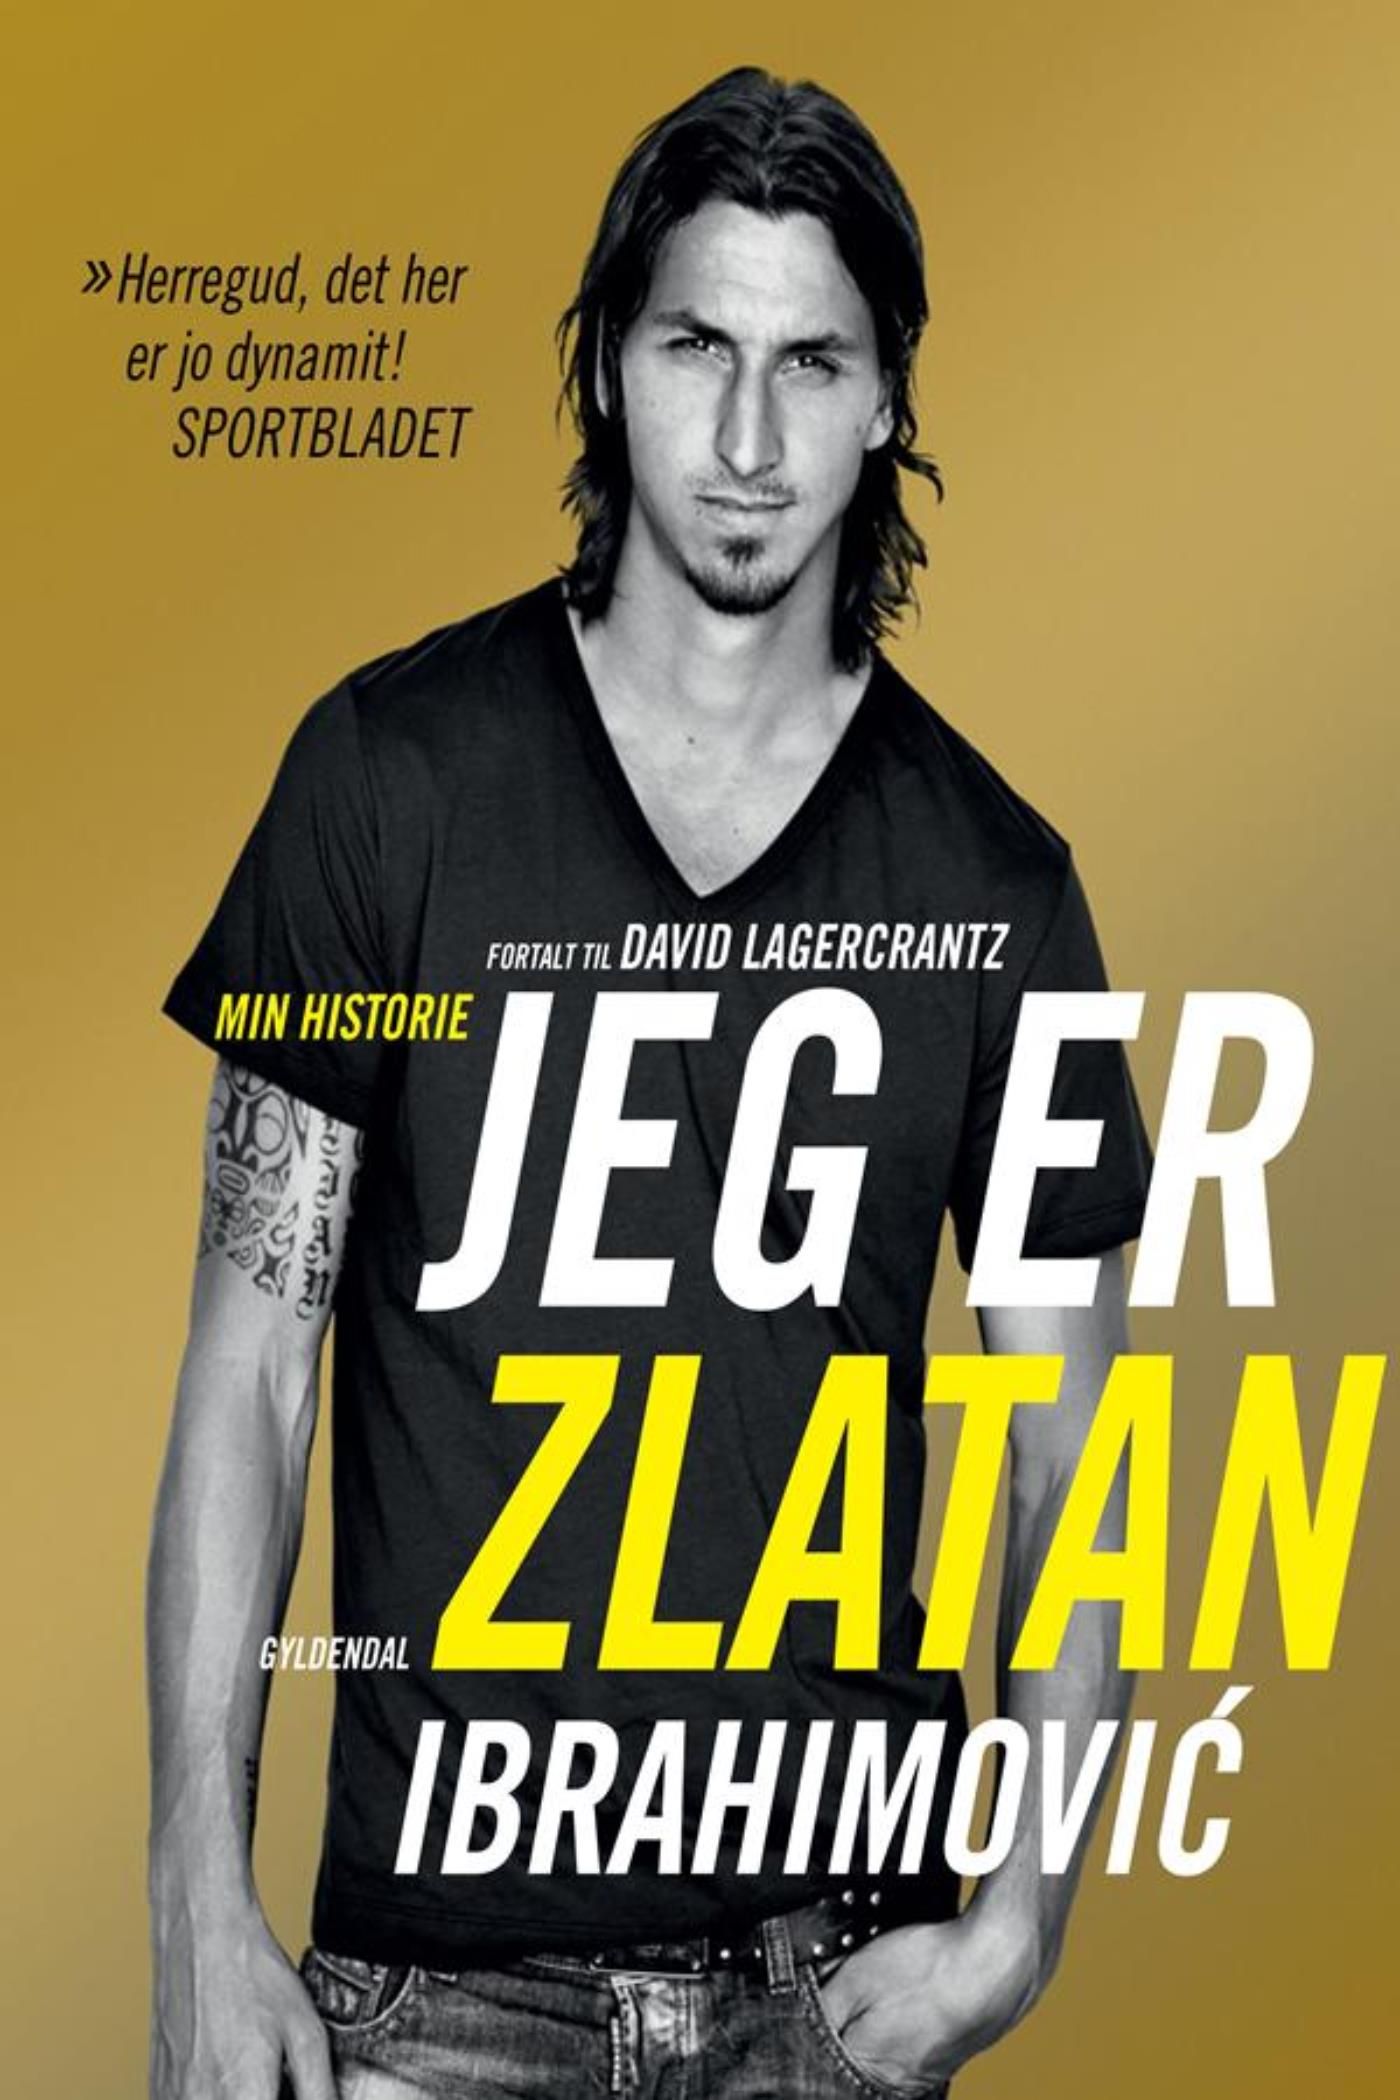 Jeg er Zlatan Ibrahimovic, eBook by David Lagercrantz